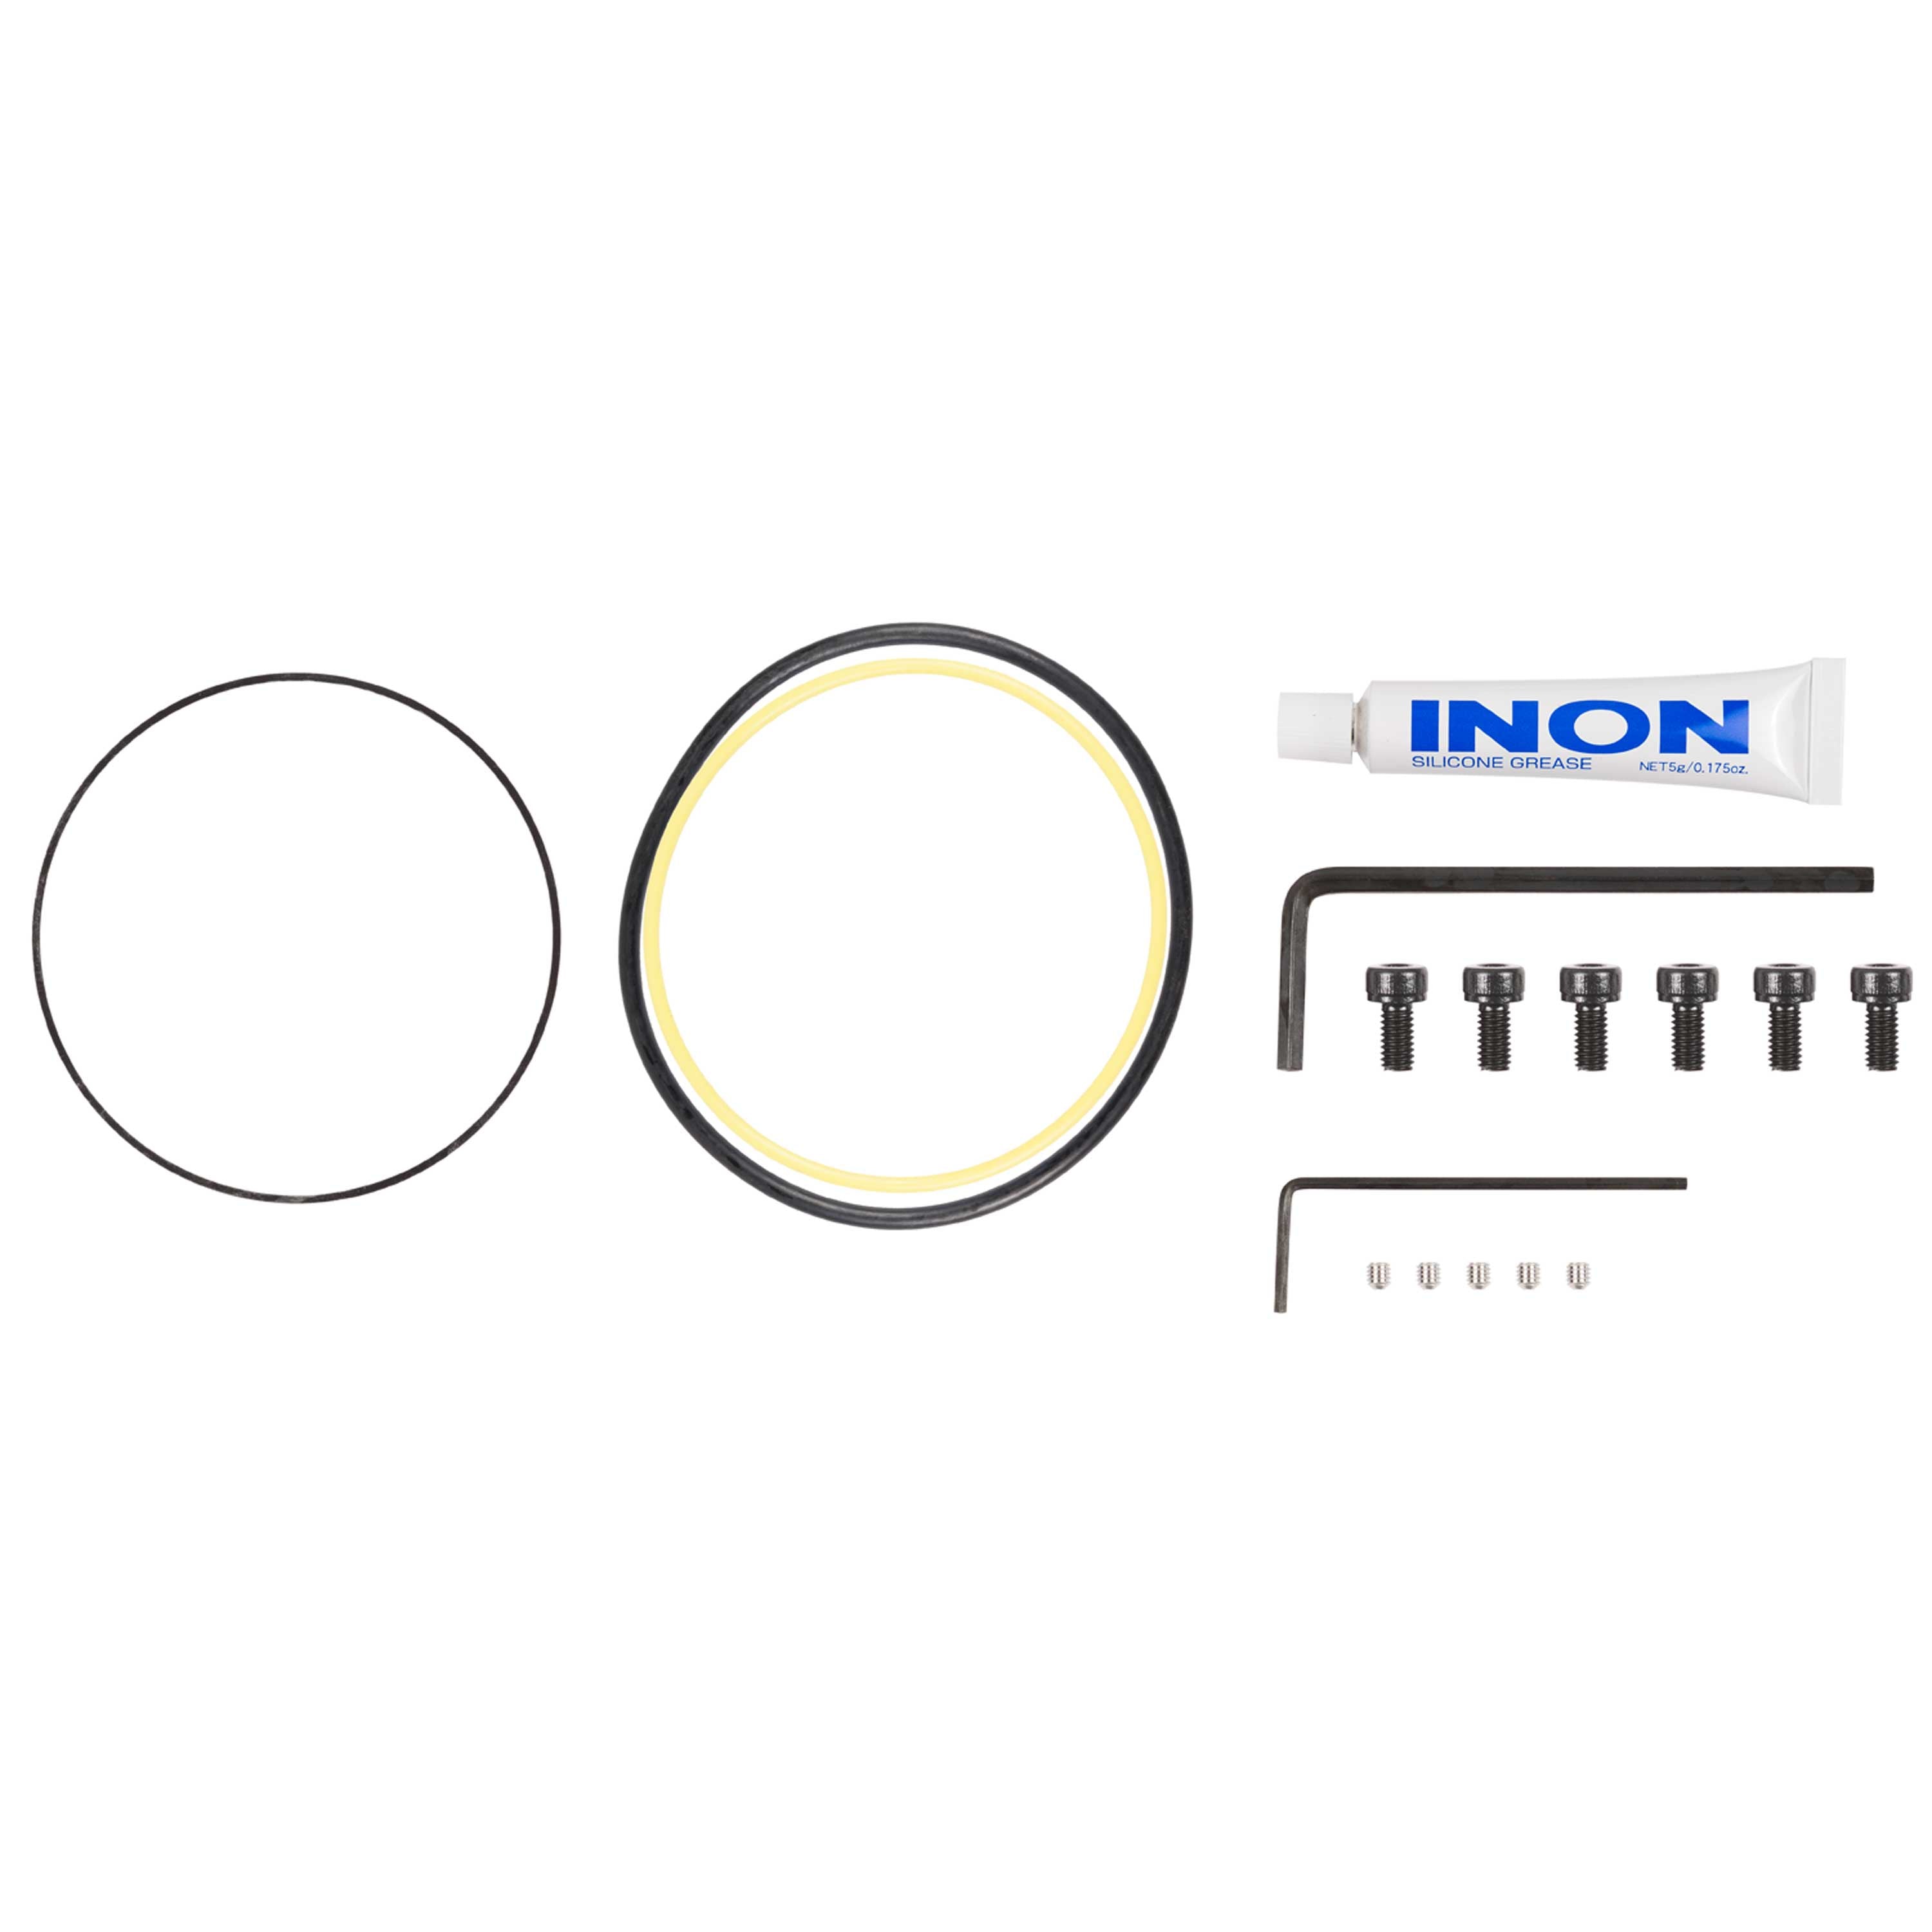 INON Dome Lens Unit II for UWL-H100